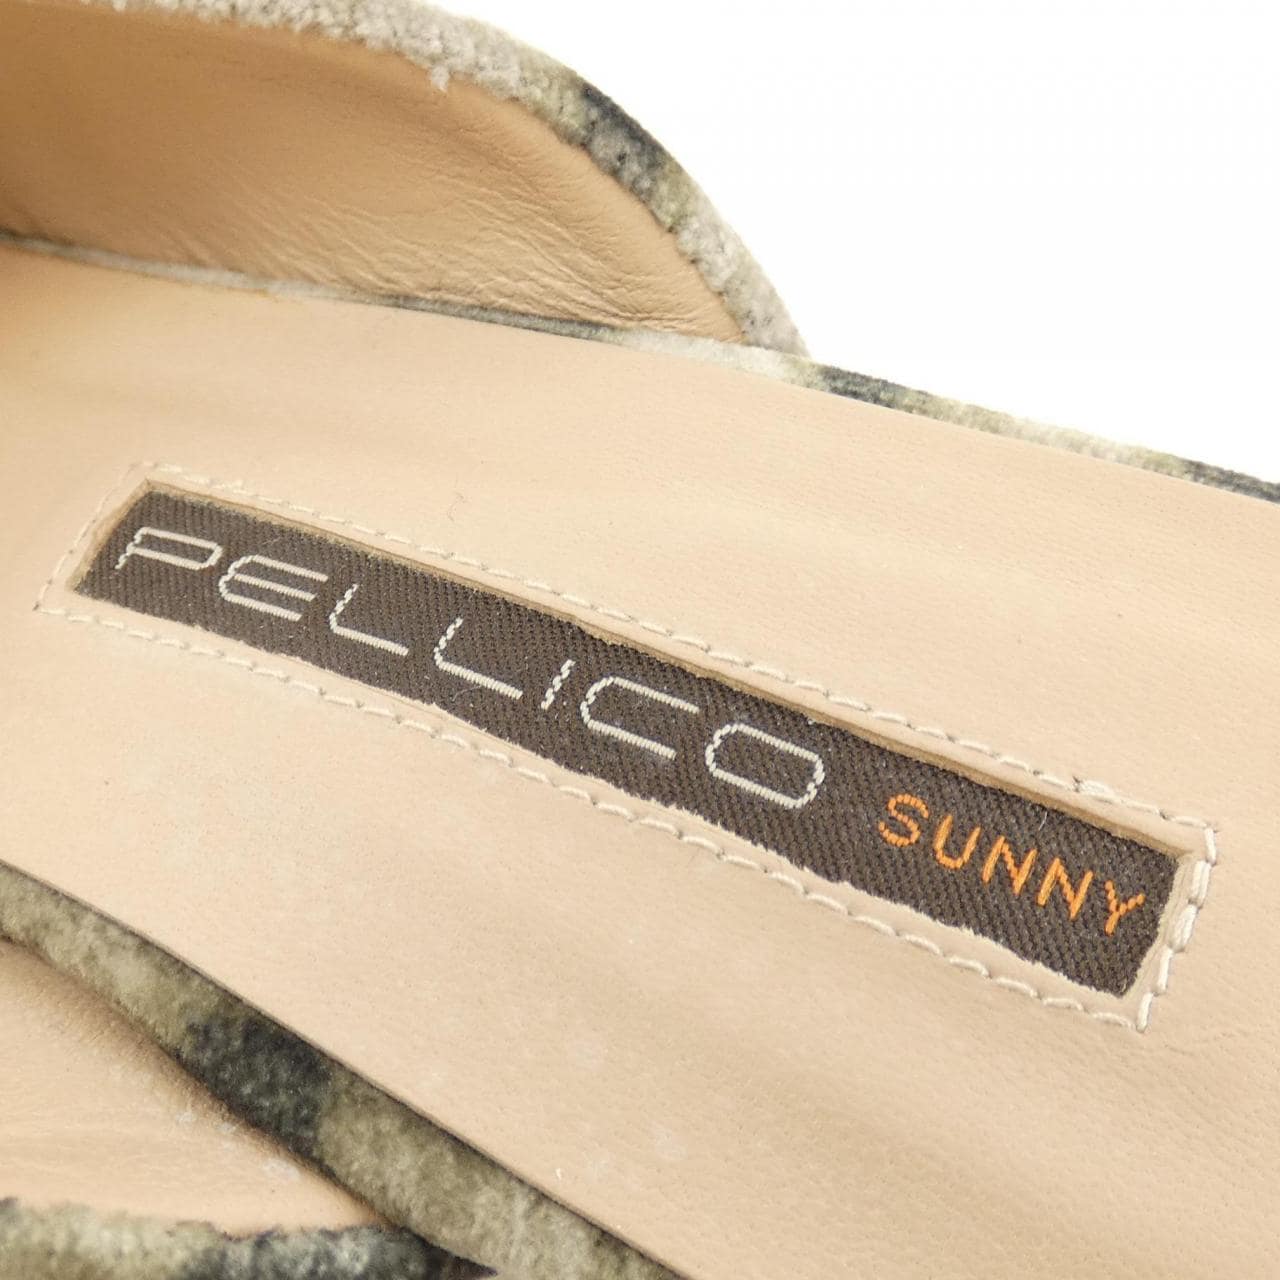 PELLICO SUNNY shoes